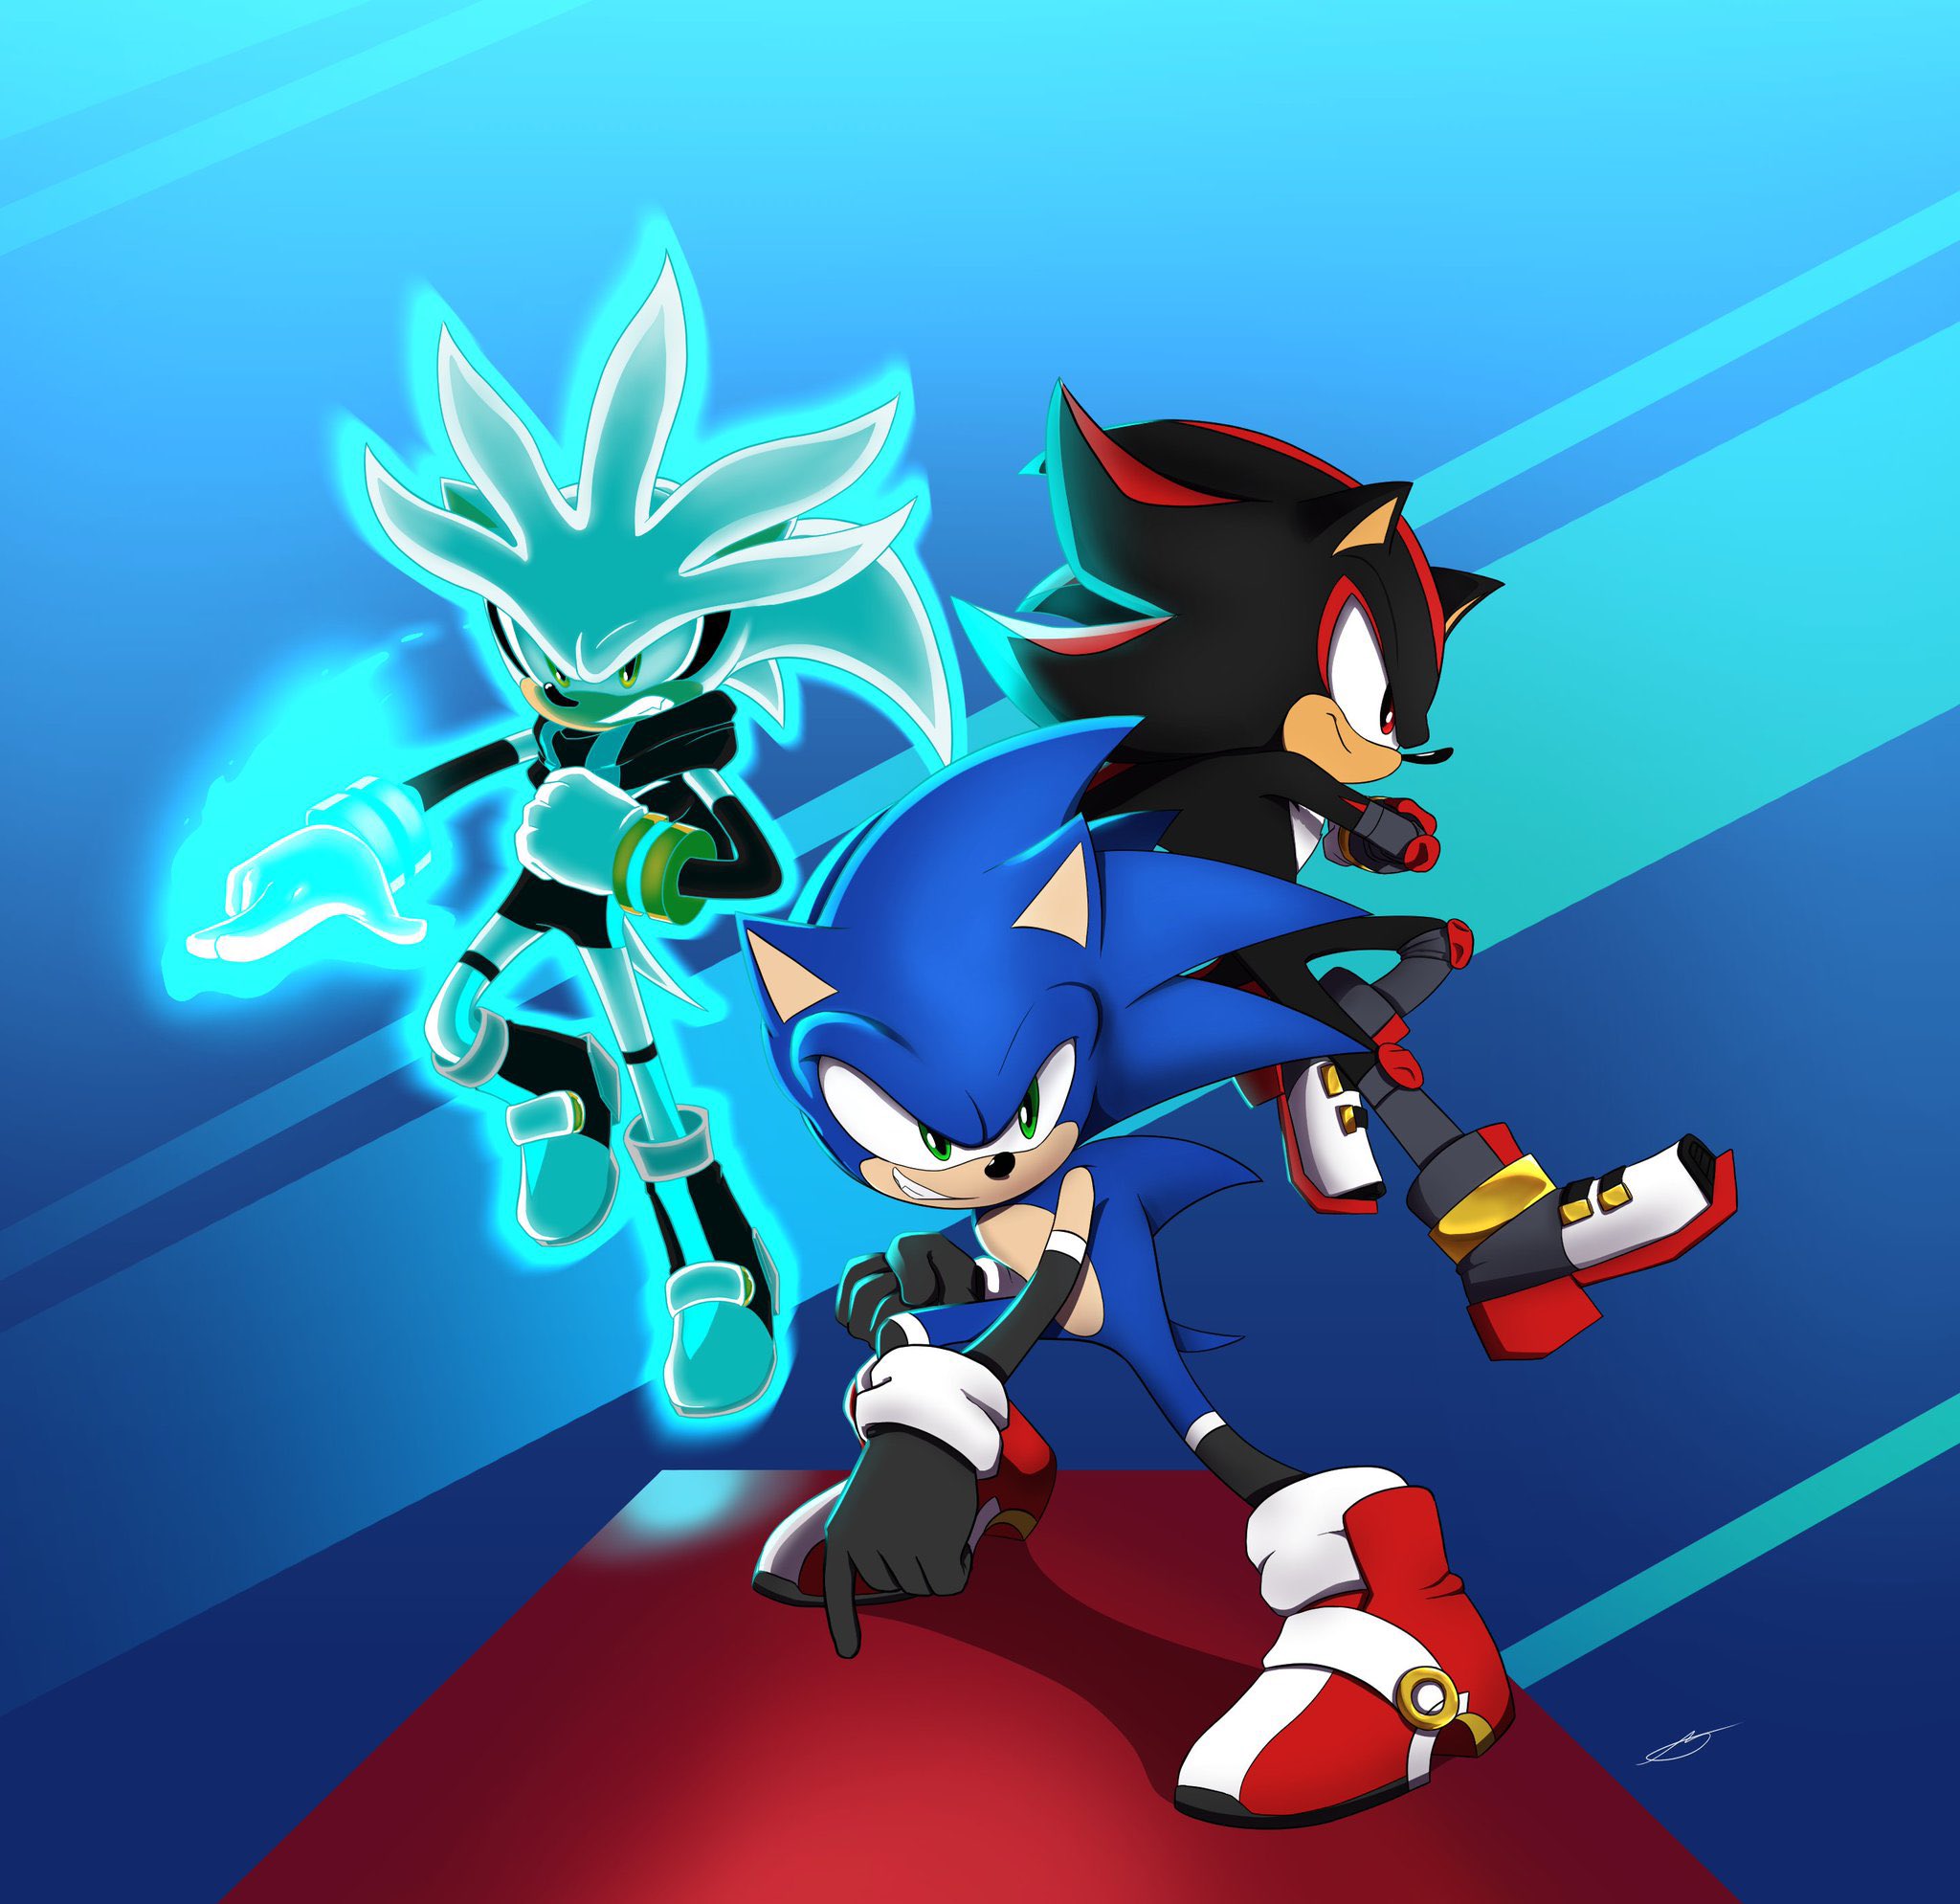 Sonic Chaos Announcement Trailer (fan game)